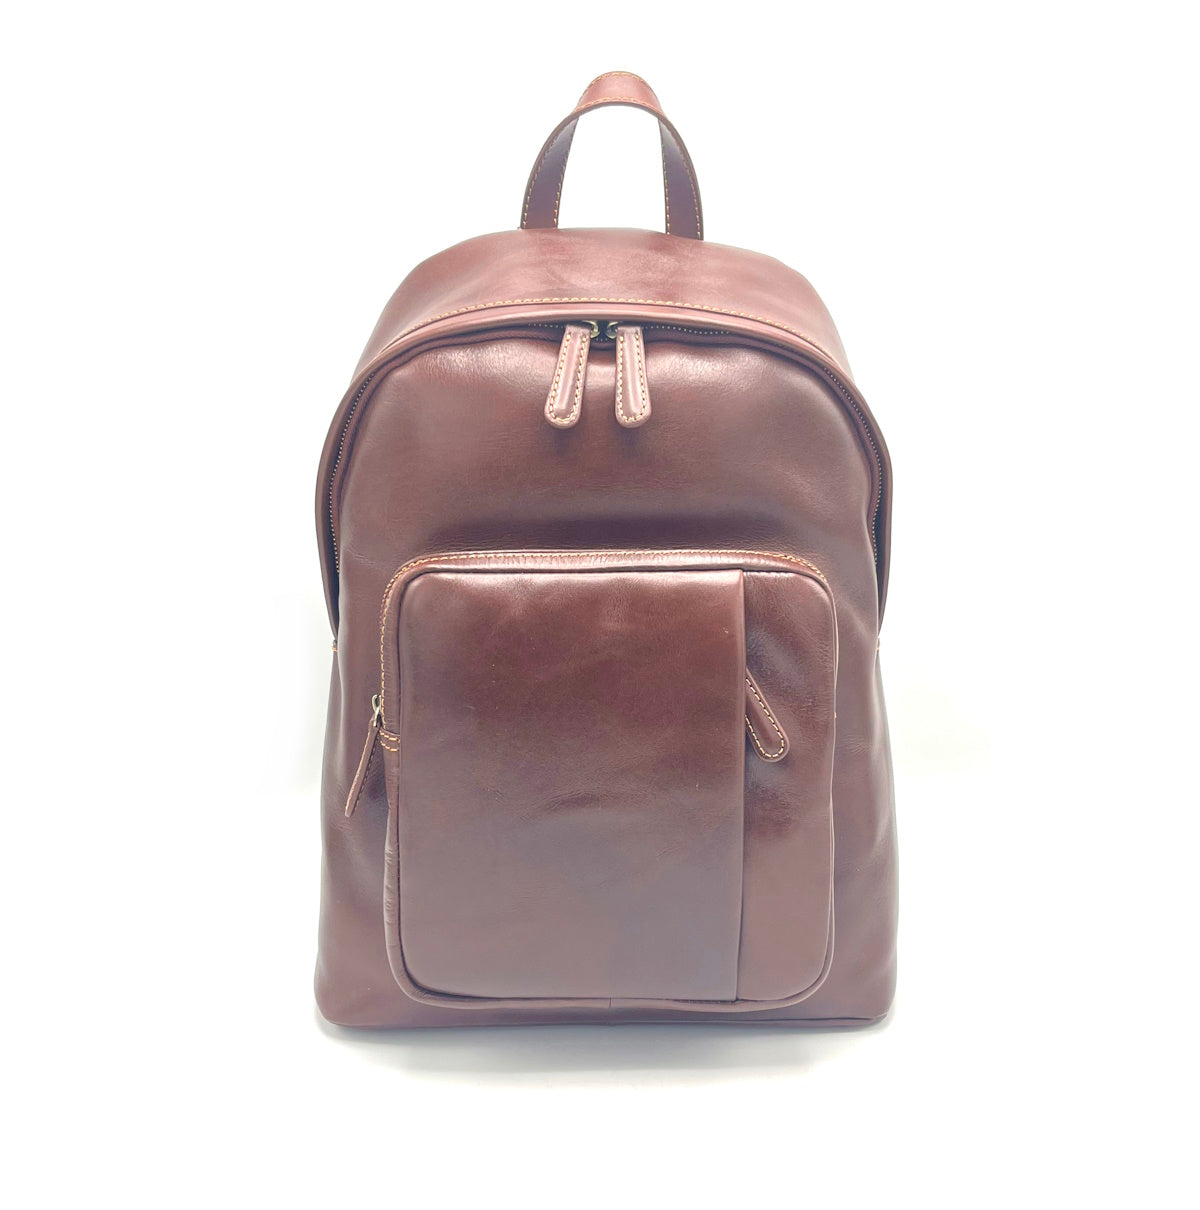 Buffered leather backpack, for men, art. TA4801